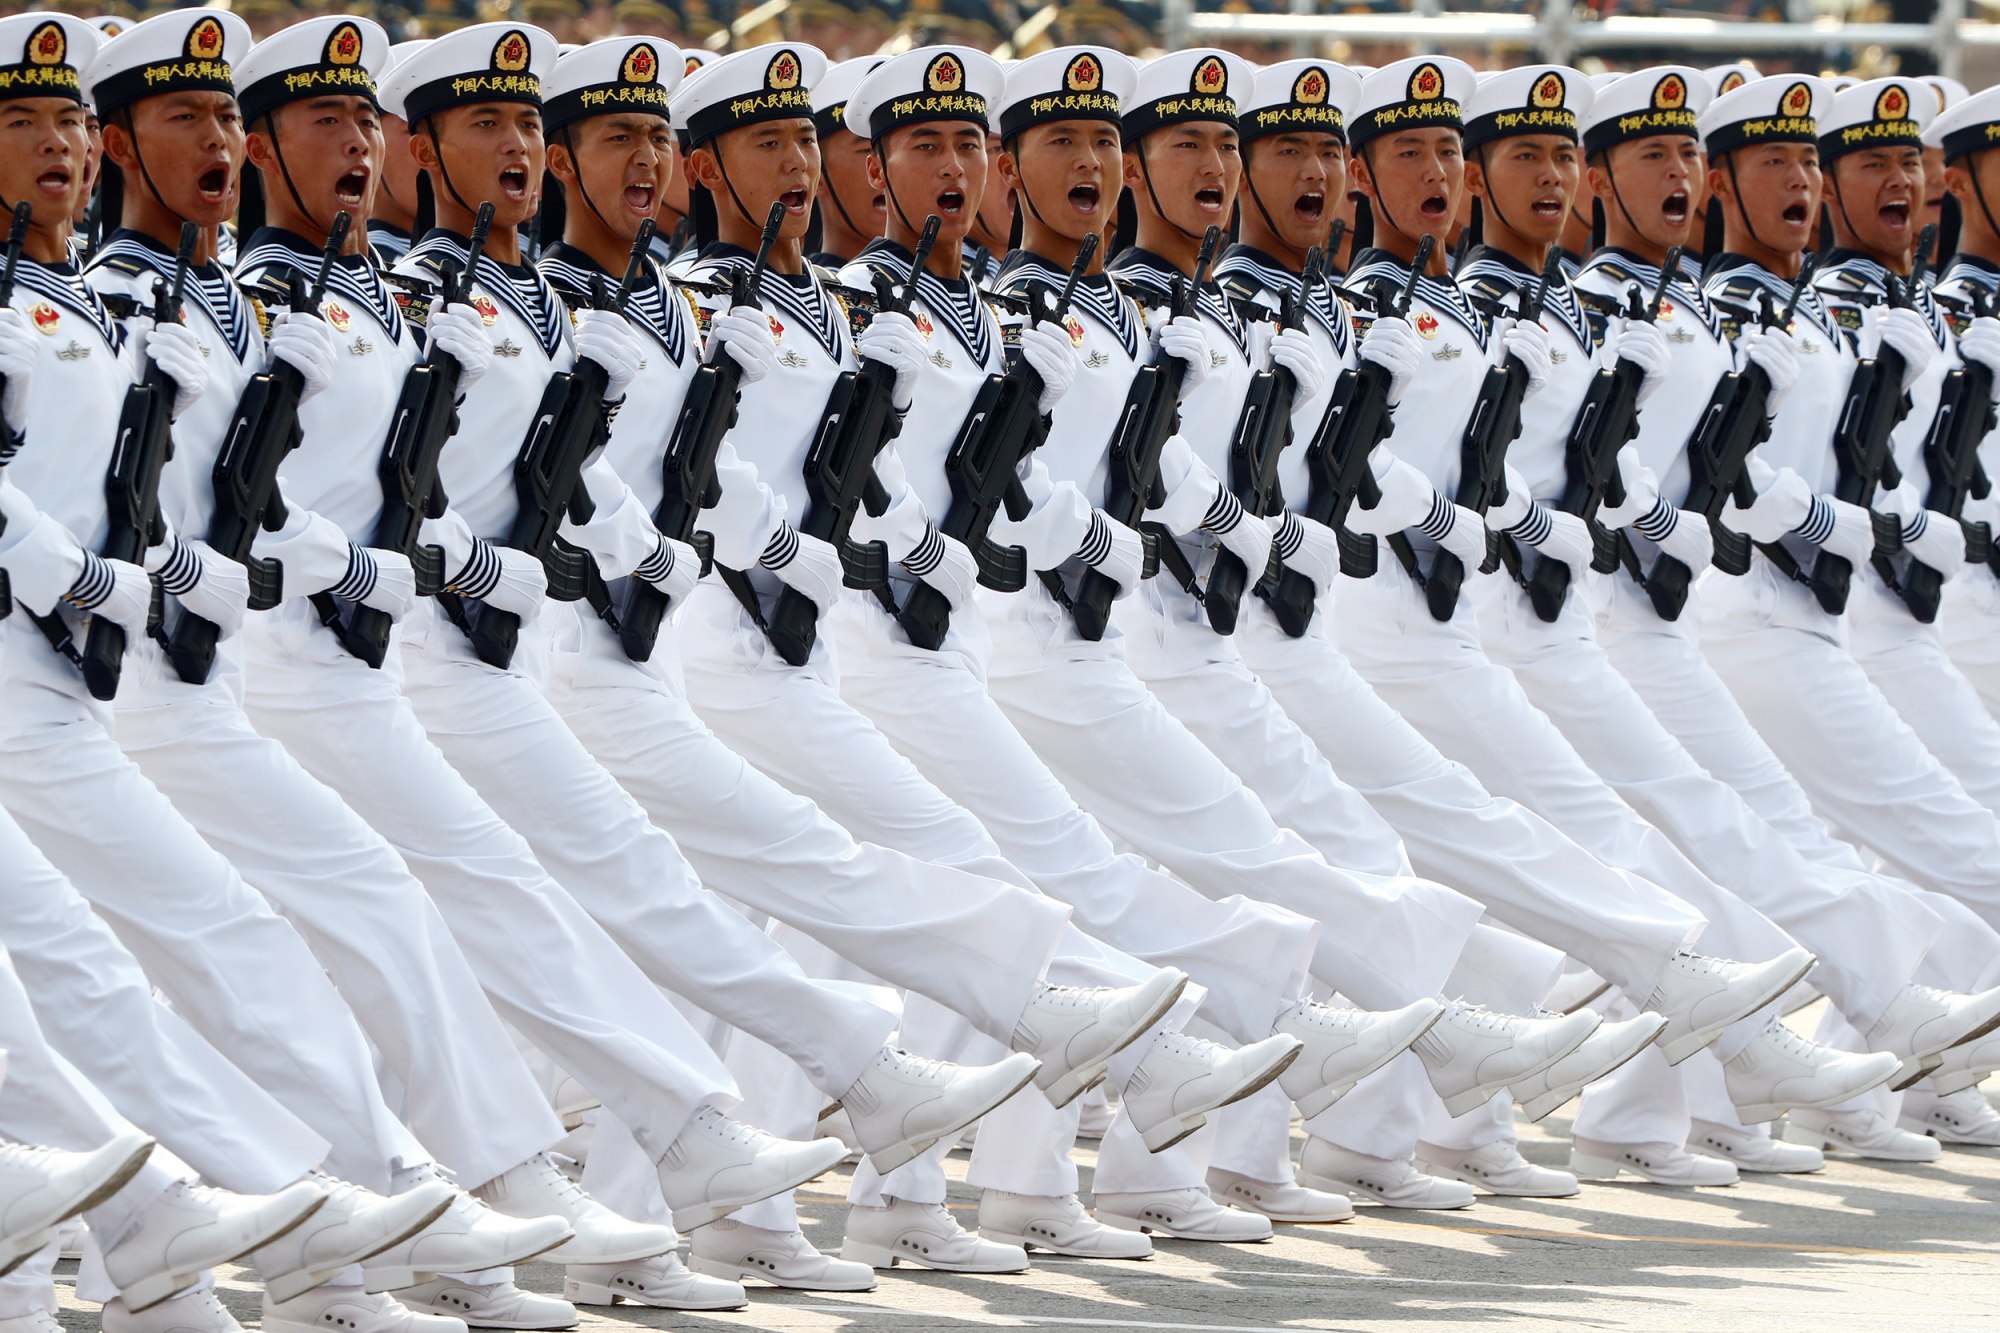 200720-think-china-military-parade-se-234p_f42f4e49ea35dd45ad5c2bfaa03c1d30.fit-2000w.jpg